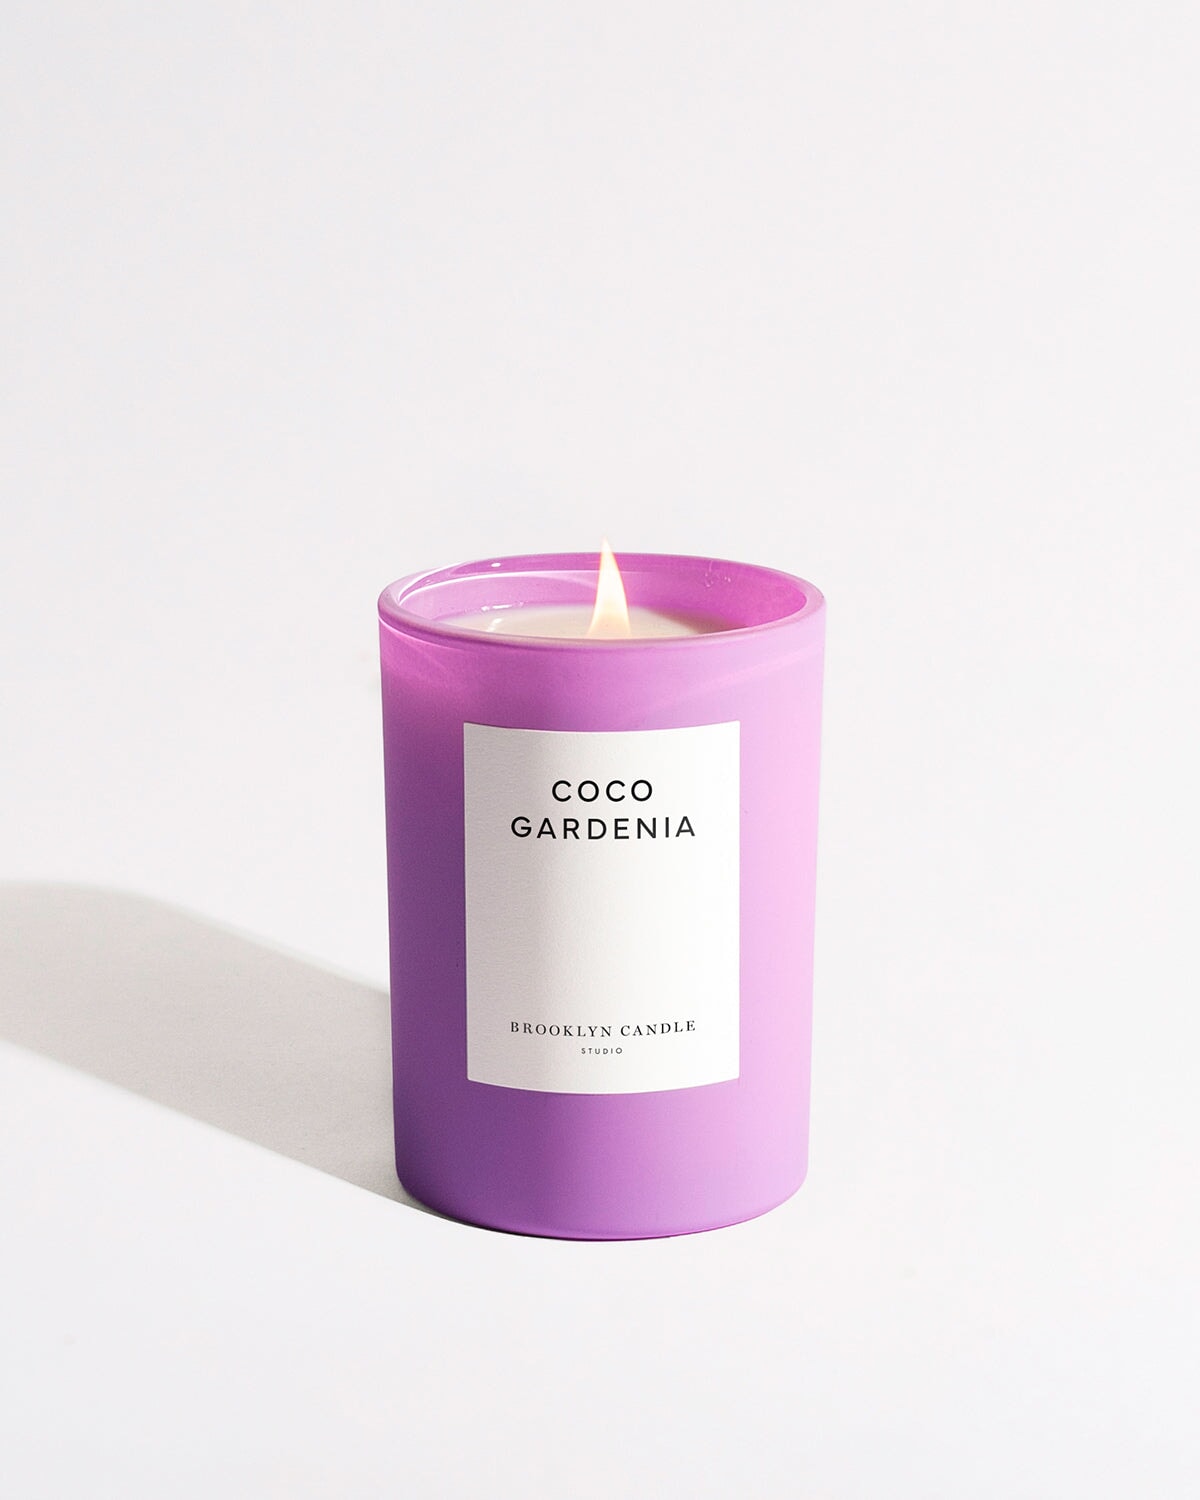 Coco Gardenia Spring Edition Candle Lilac Haze Collection Brooklyn Candle Studio 